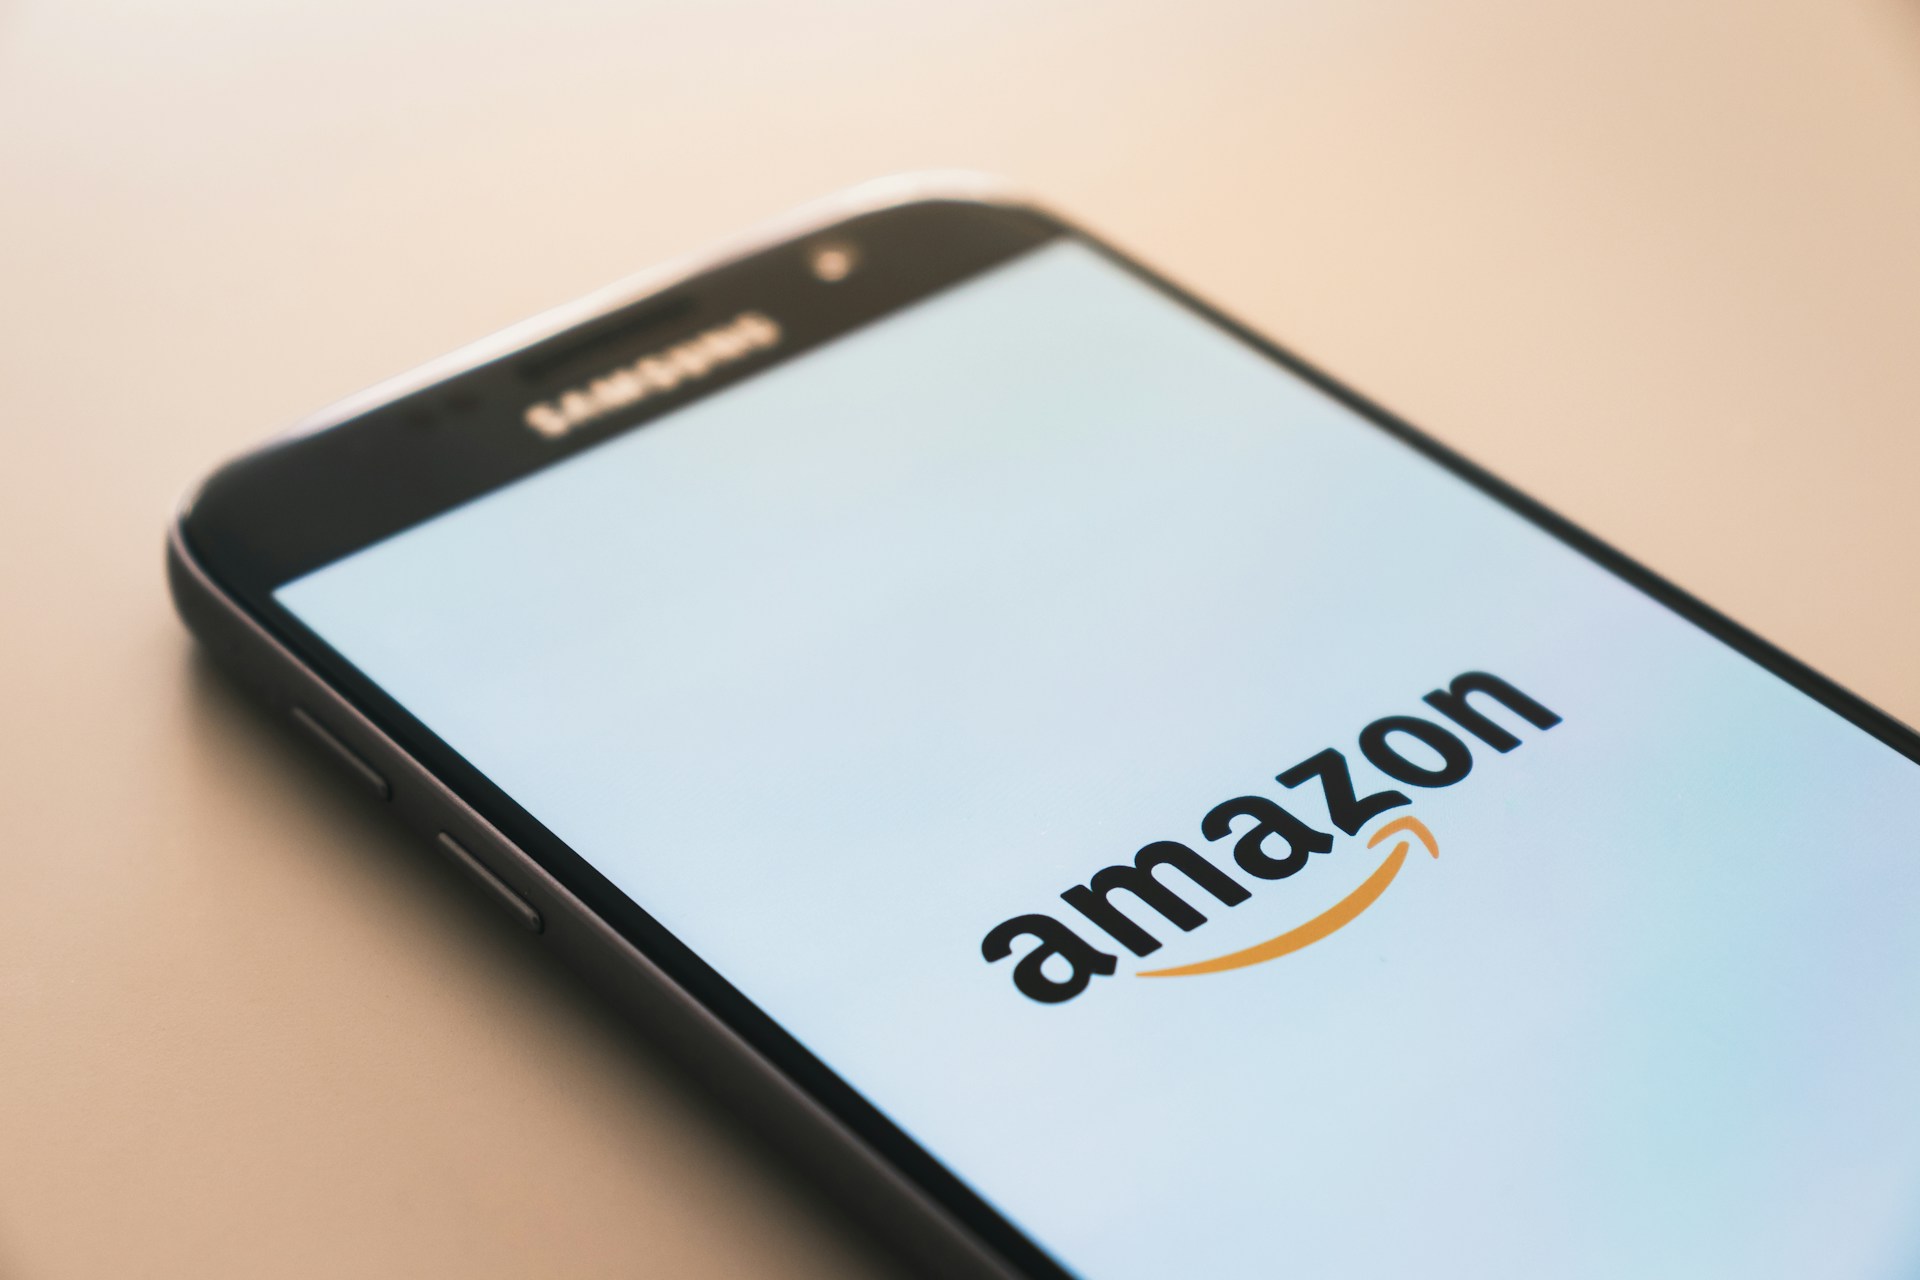 Amazon Web Services invertirá 5.000 millones de dólares en un centro de datos en México